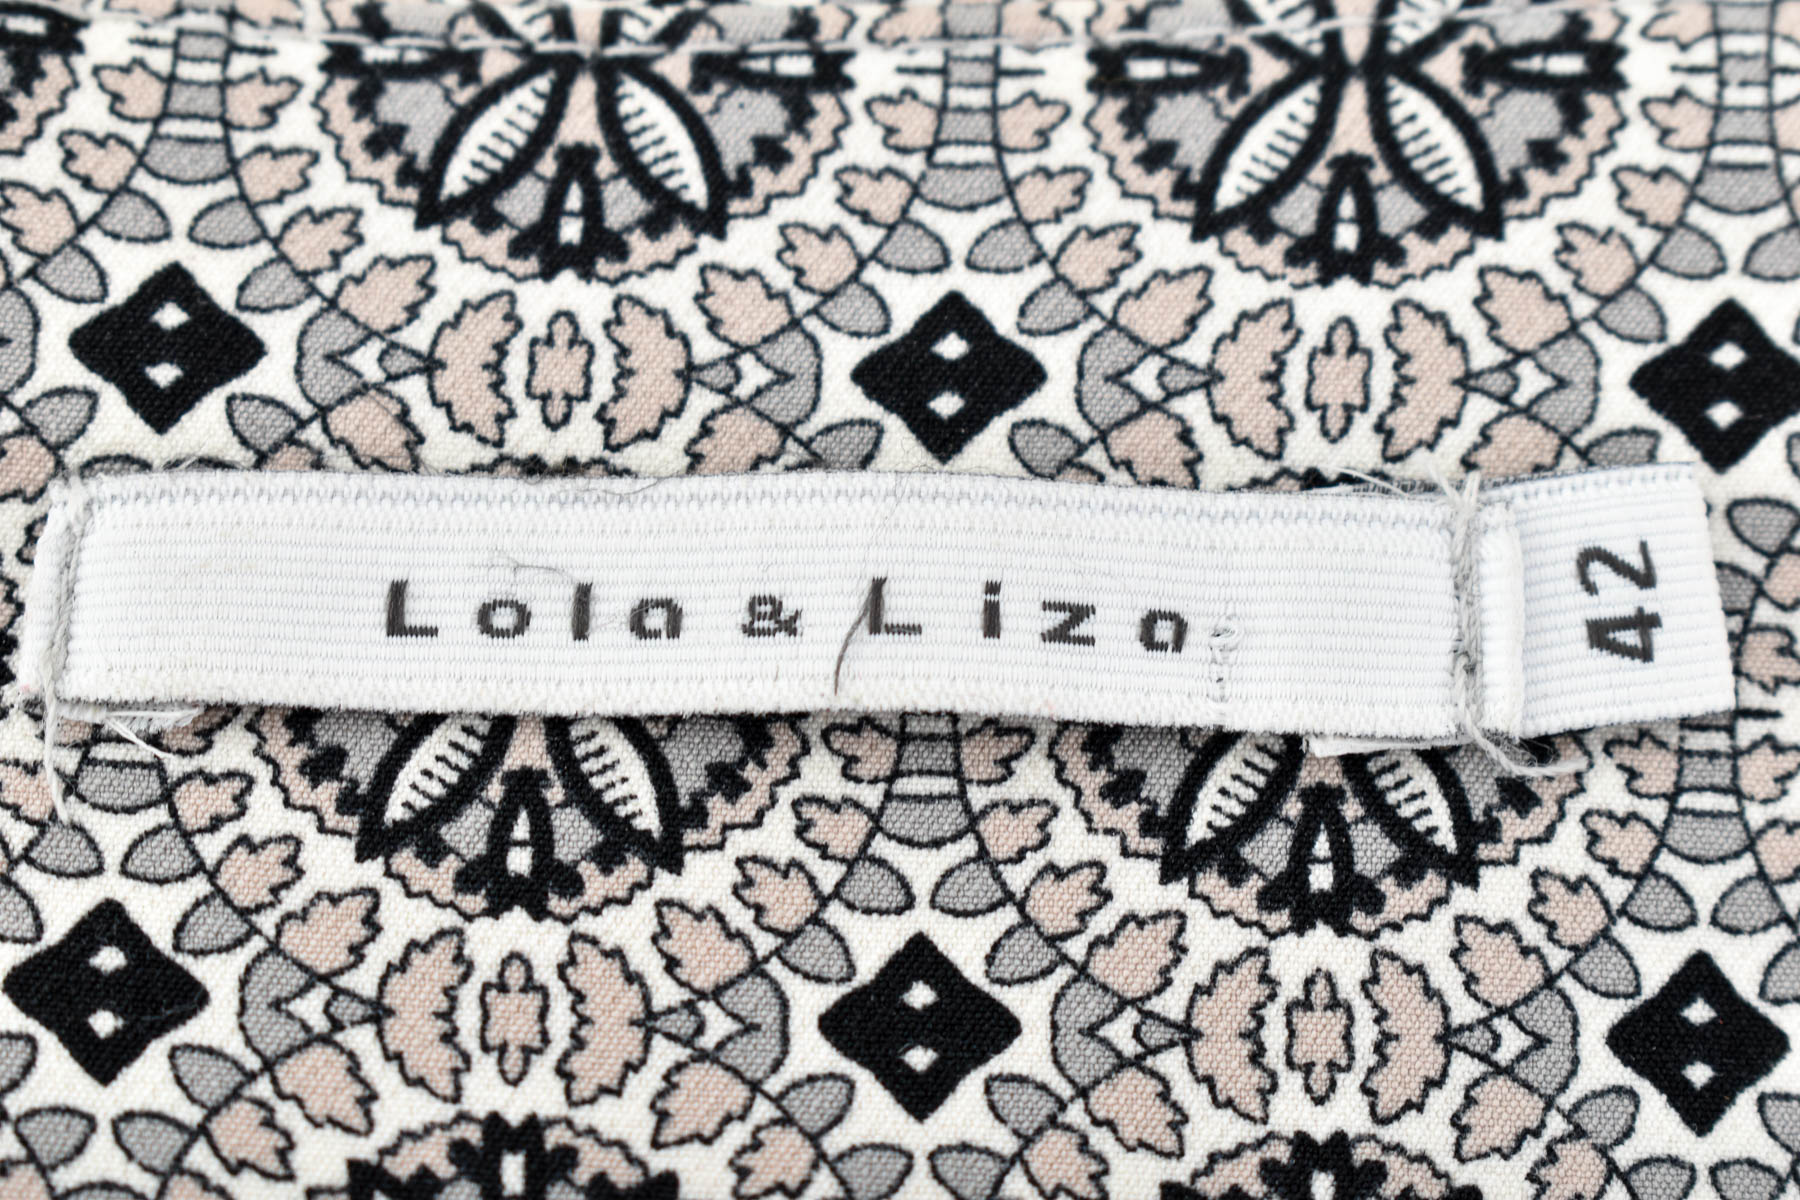 Skirt - LOLA LIZA - 2